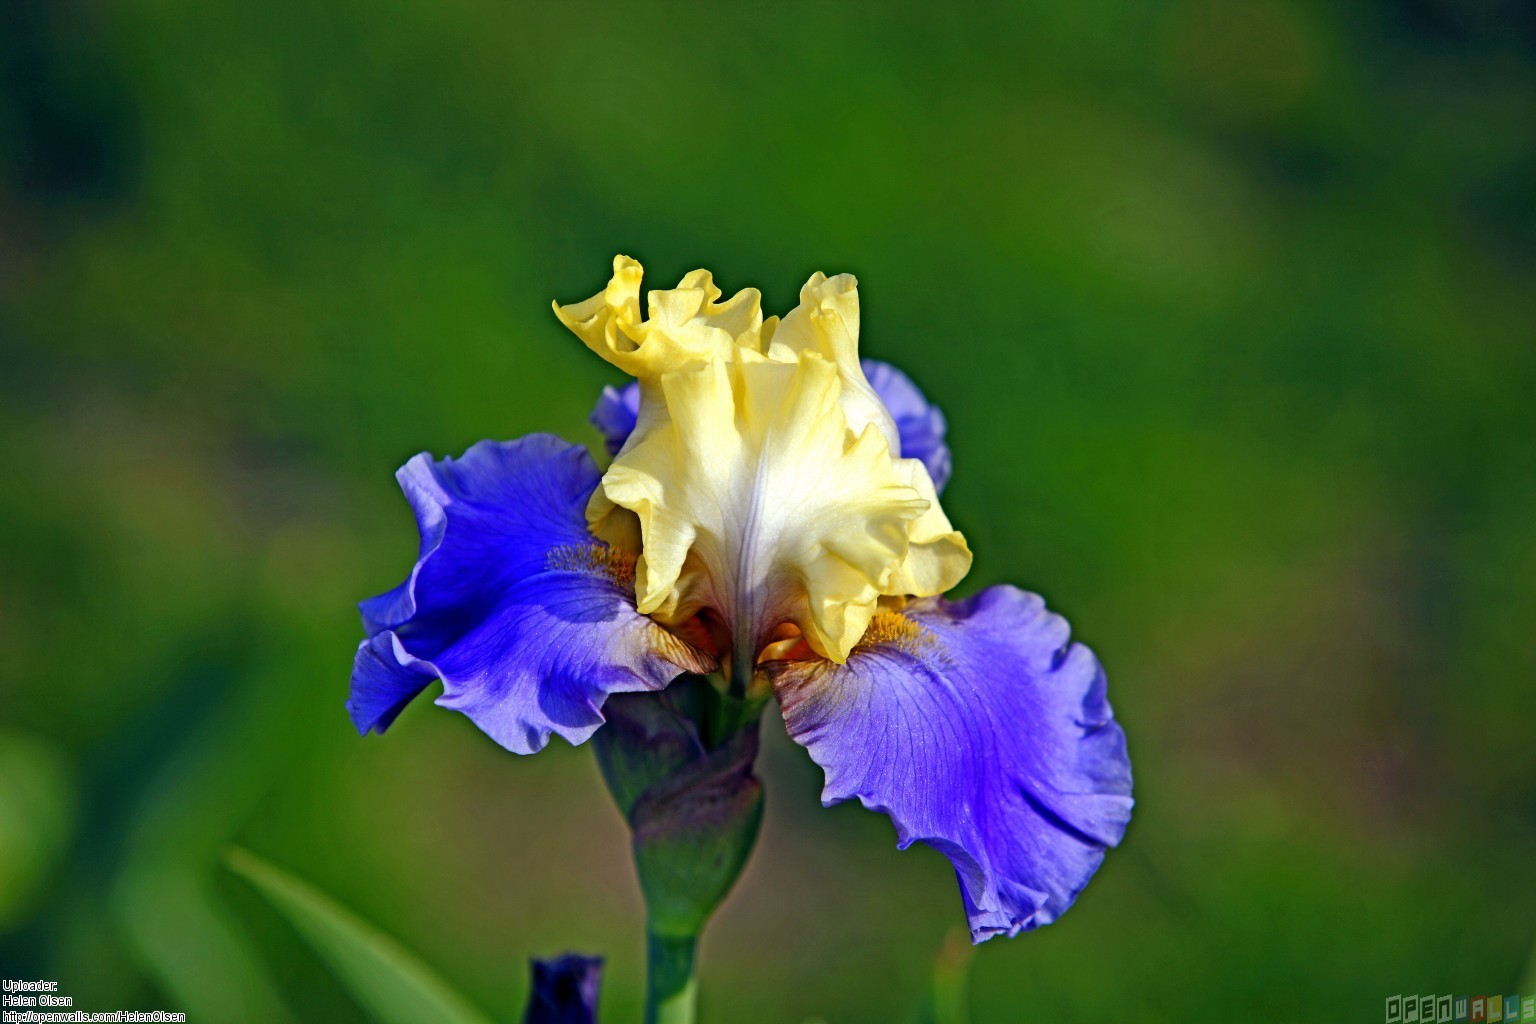 Image Gallery For Iris Flower Wallpaper